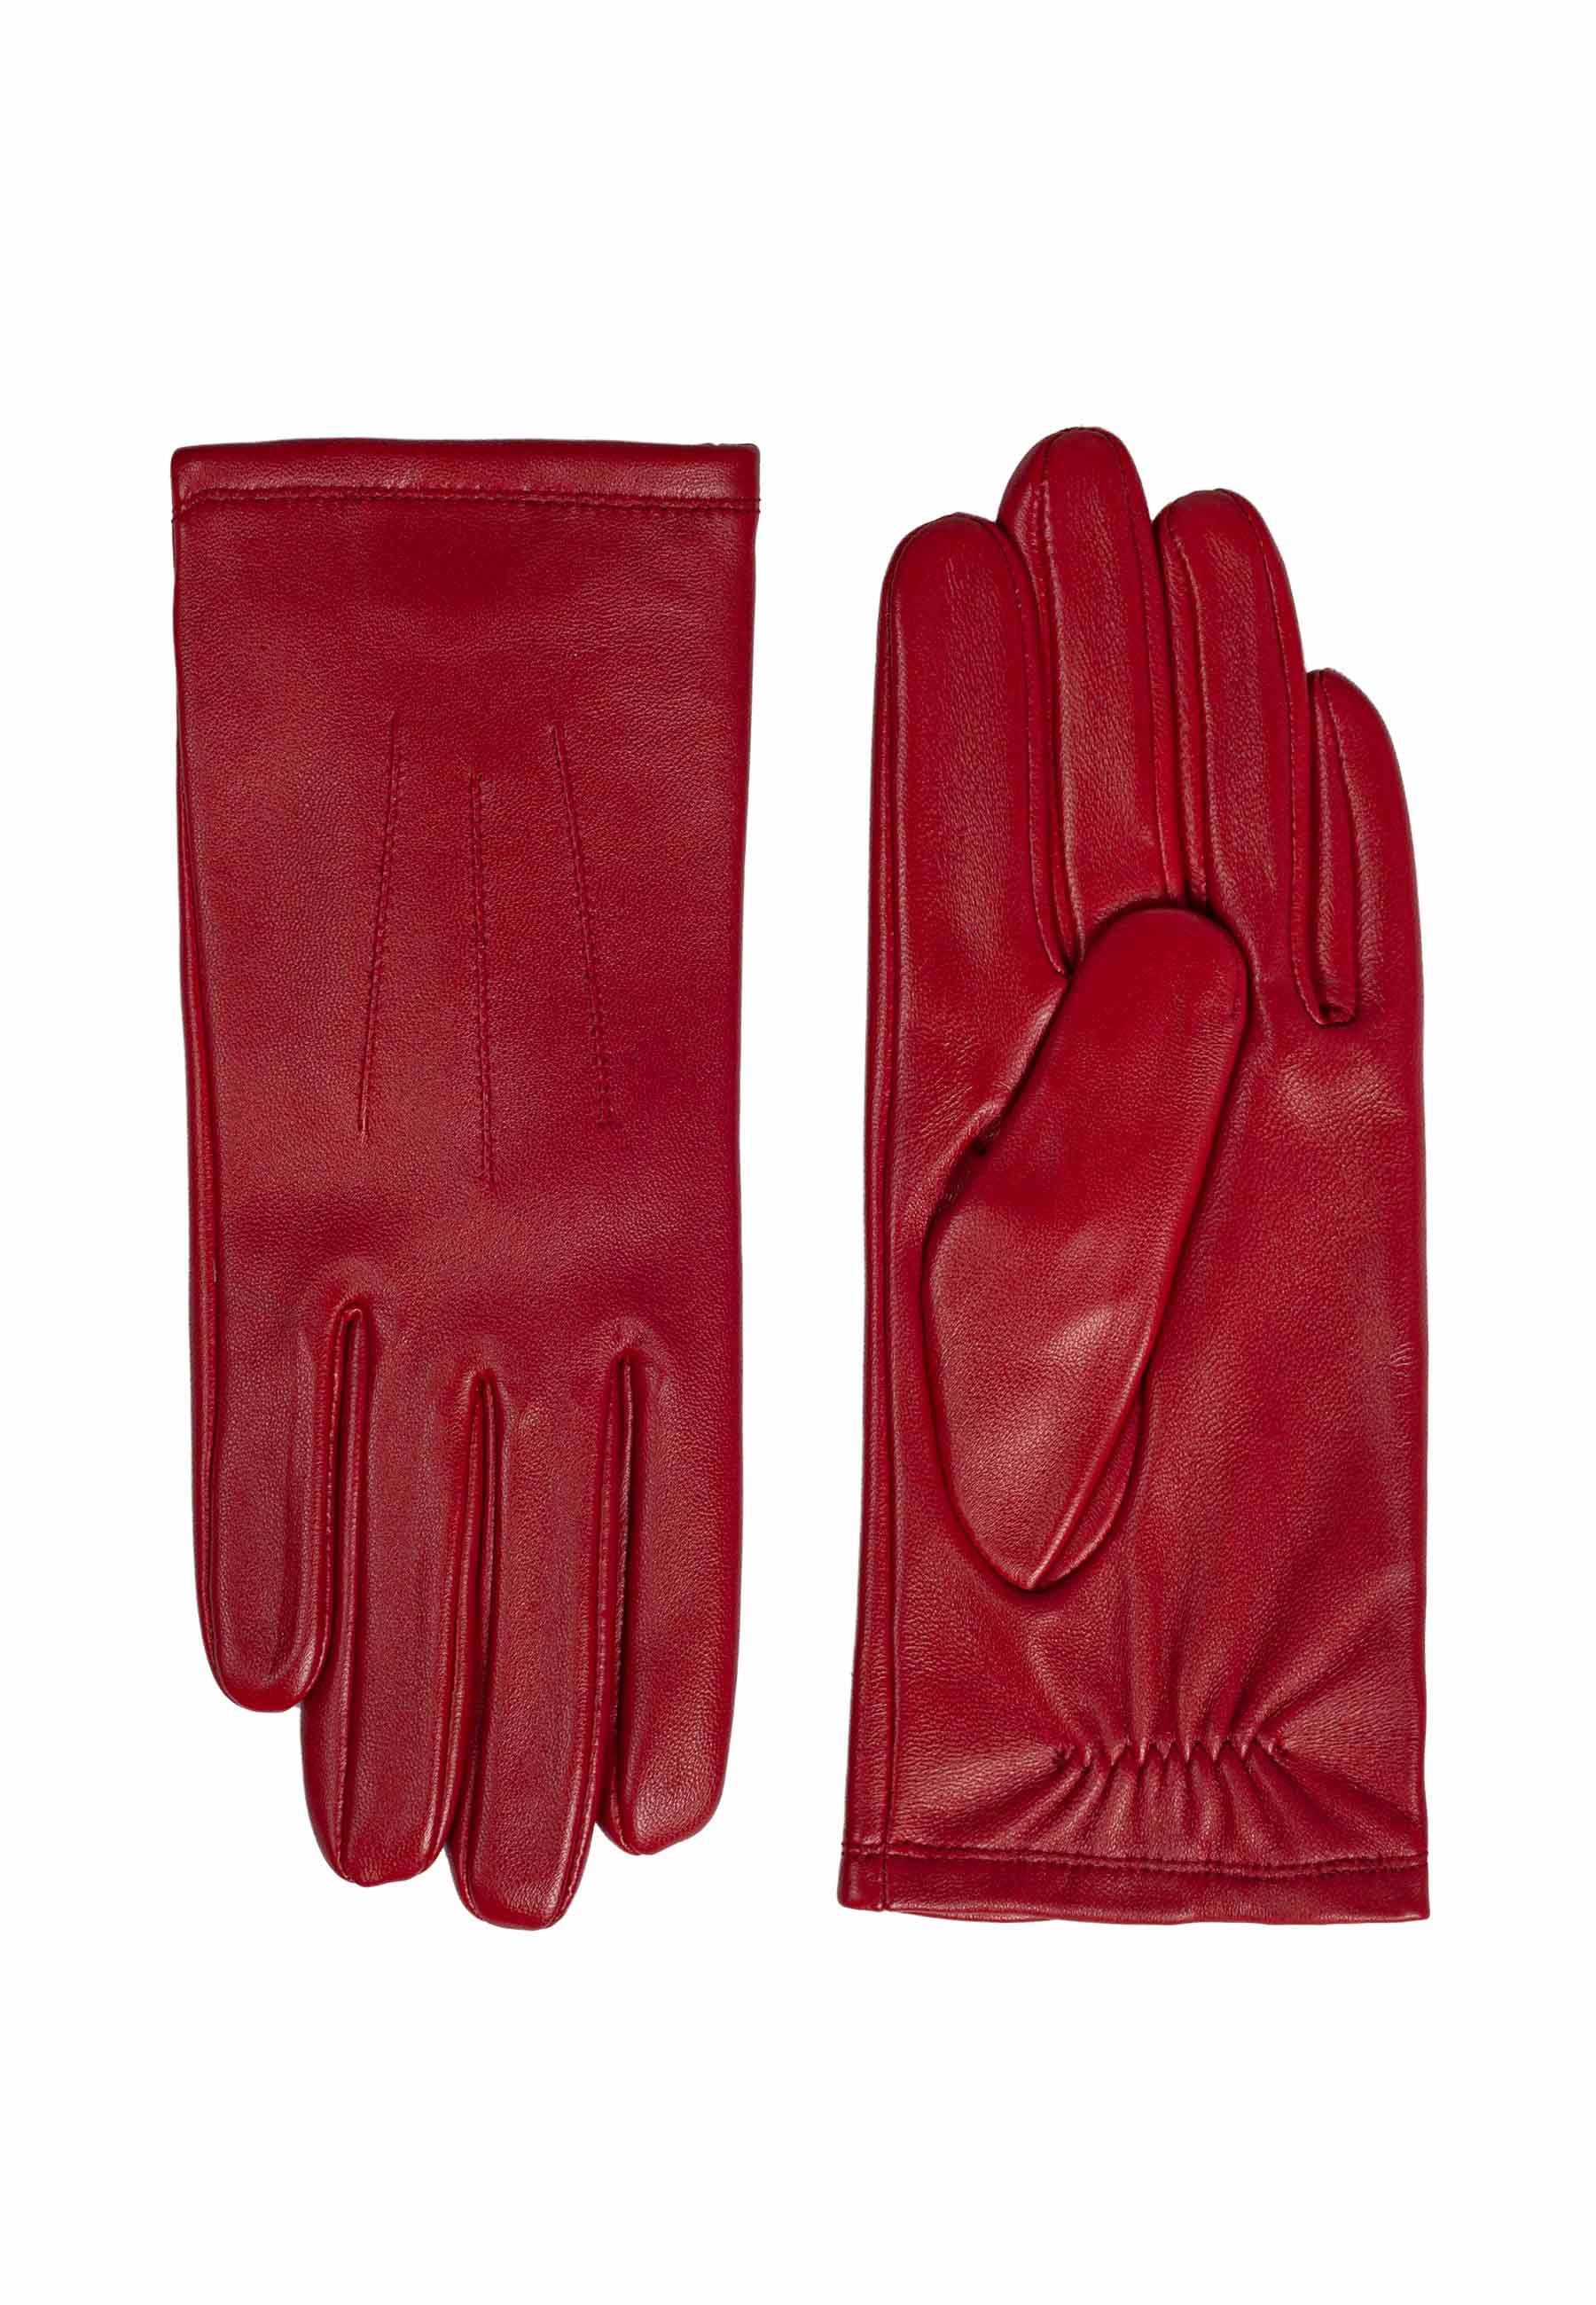 ok Gloves Lederhandschuhe Damenhandschuh Nadja red 200 | Handschuhe